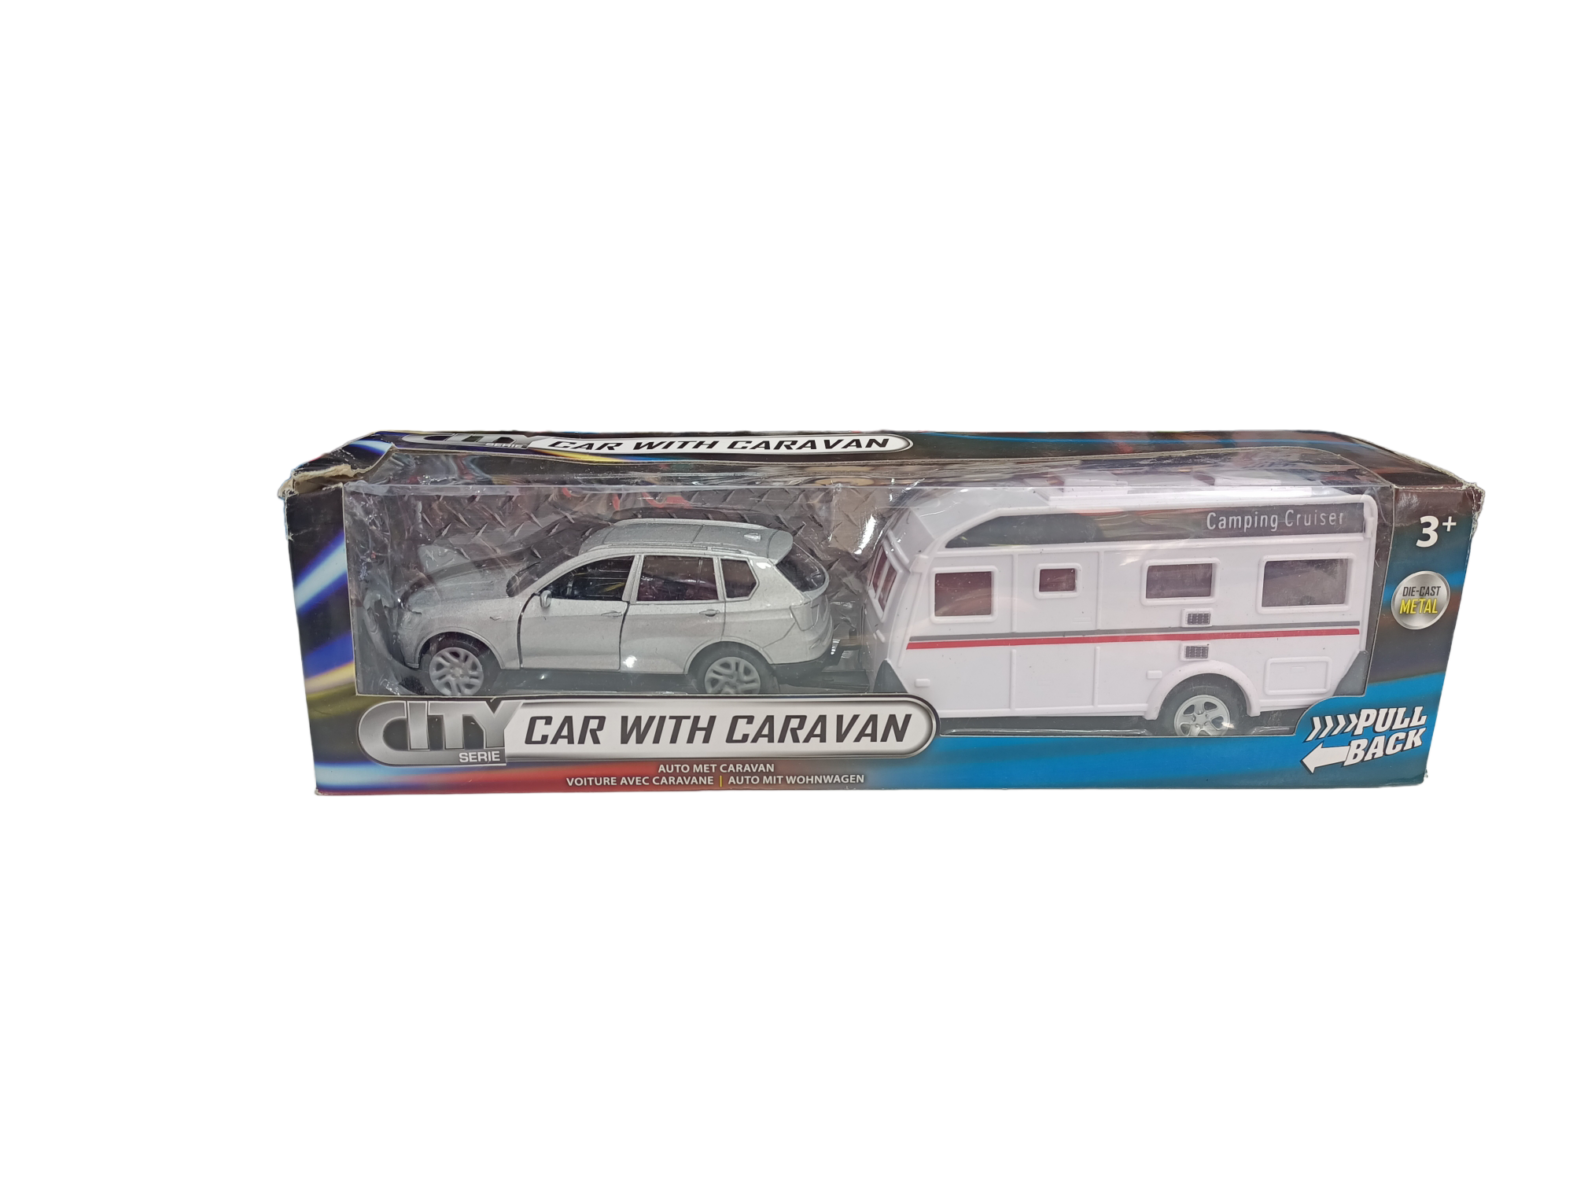 City Car with Caravan